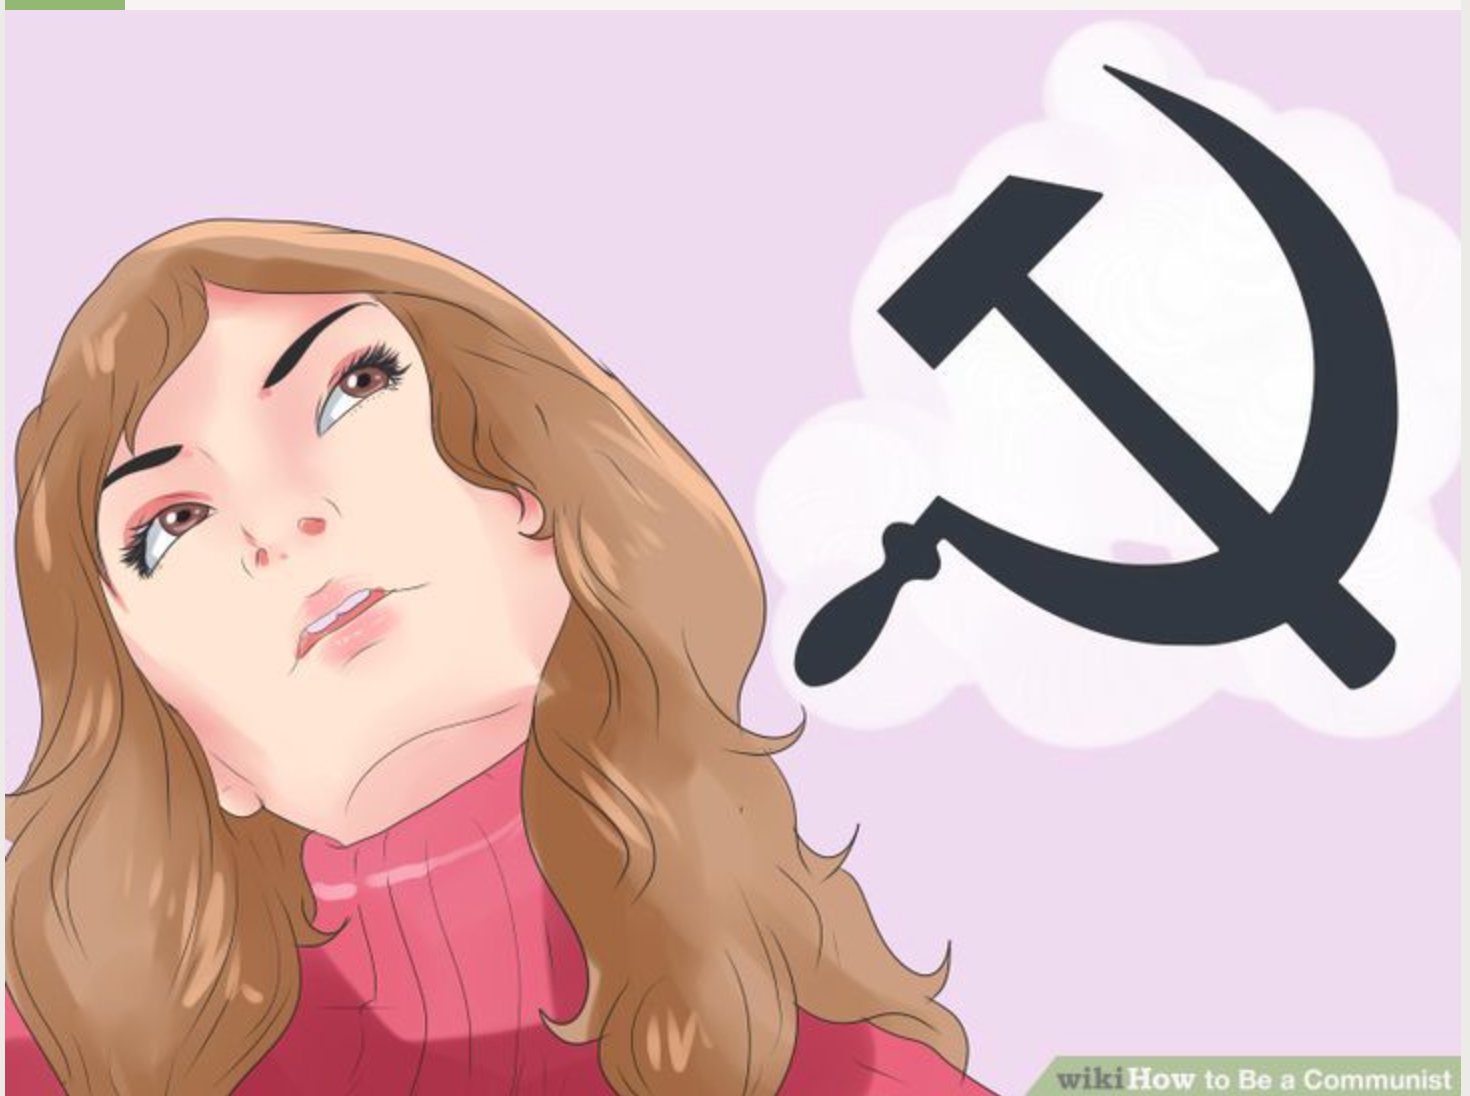 thinking communism